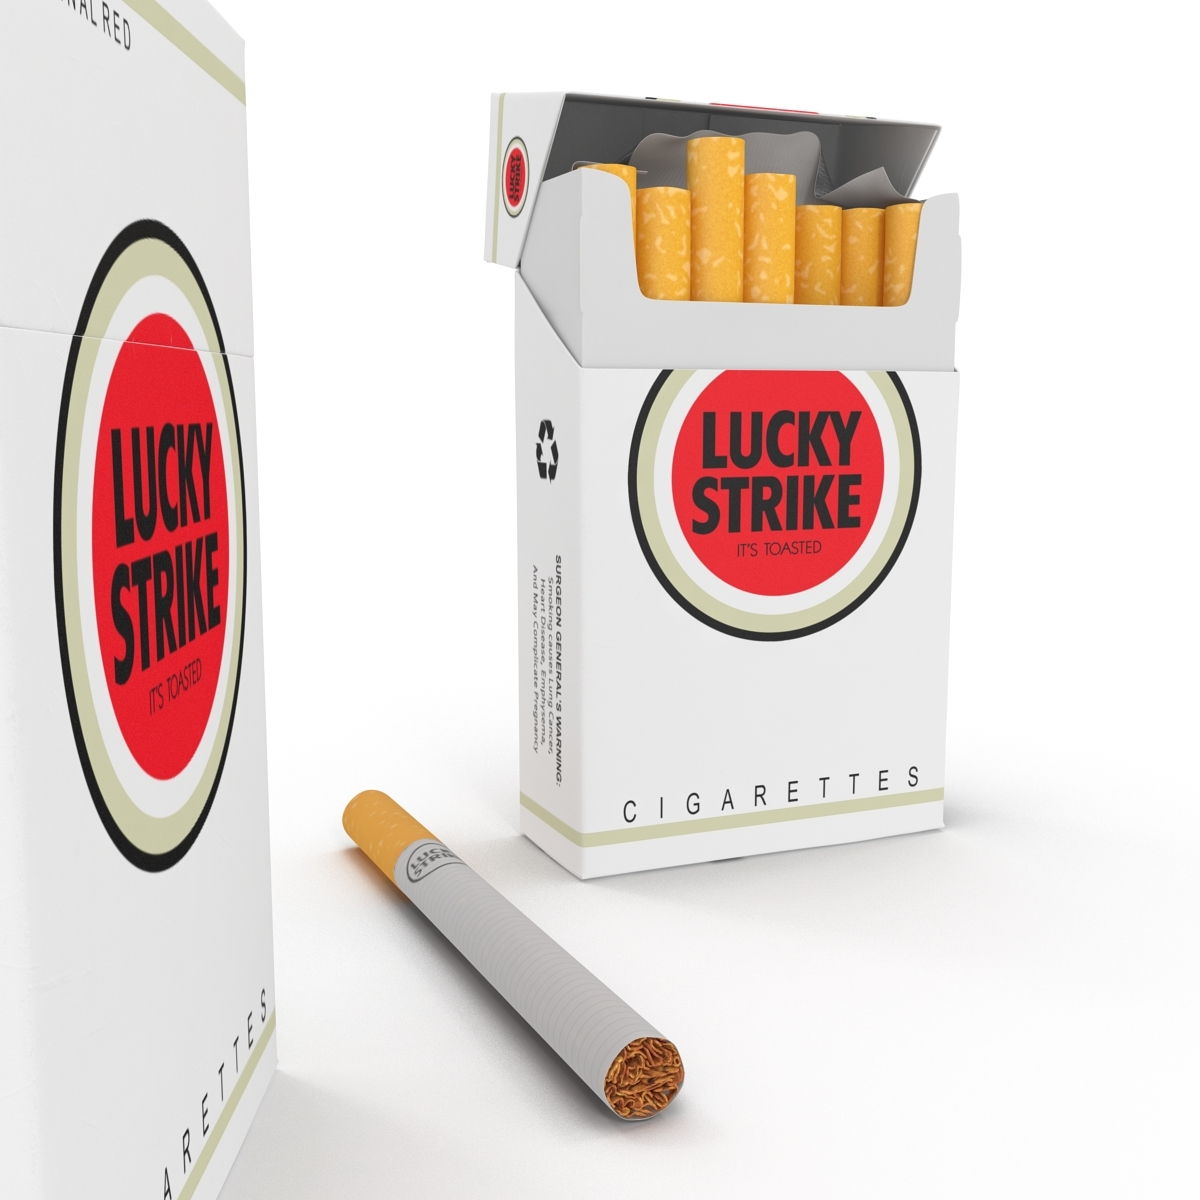 Лаки страйк арома вкусы. Лаки страйк электронная сигарета. Lucky Strike сигареты. Lucky Strike красный. Сигареты d.